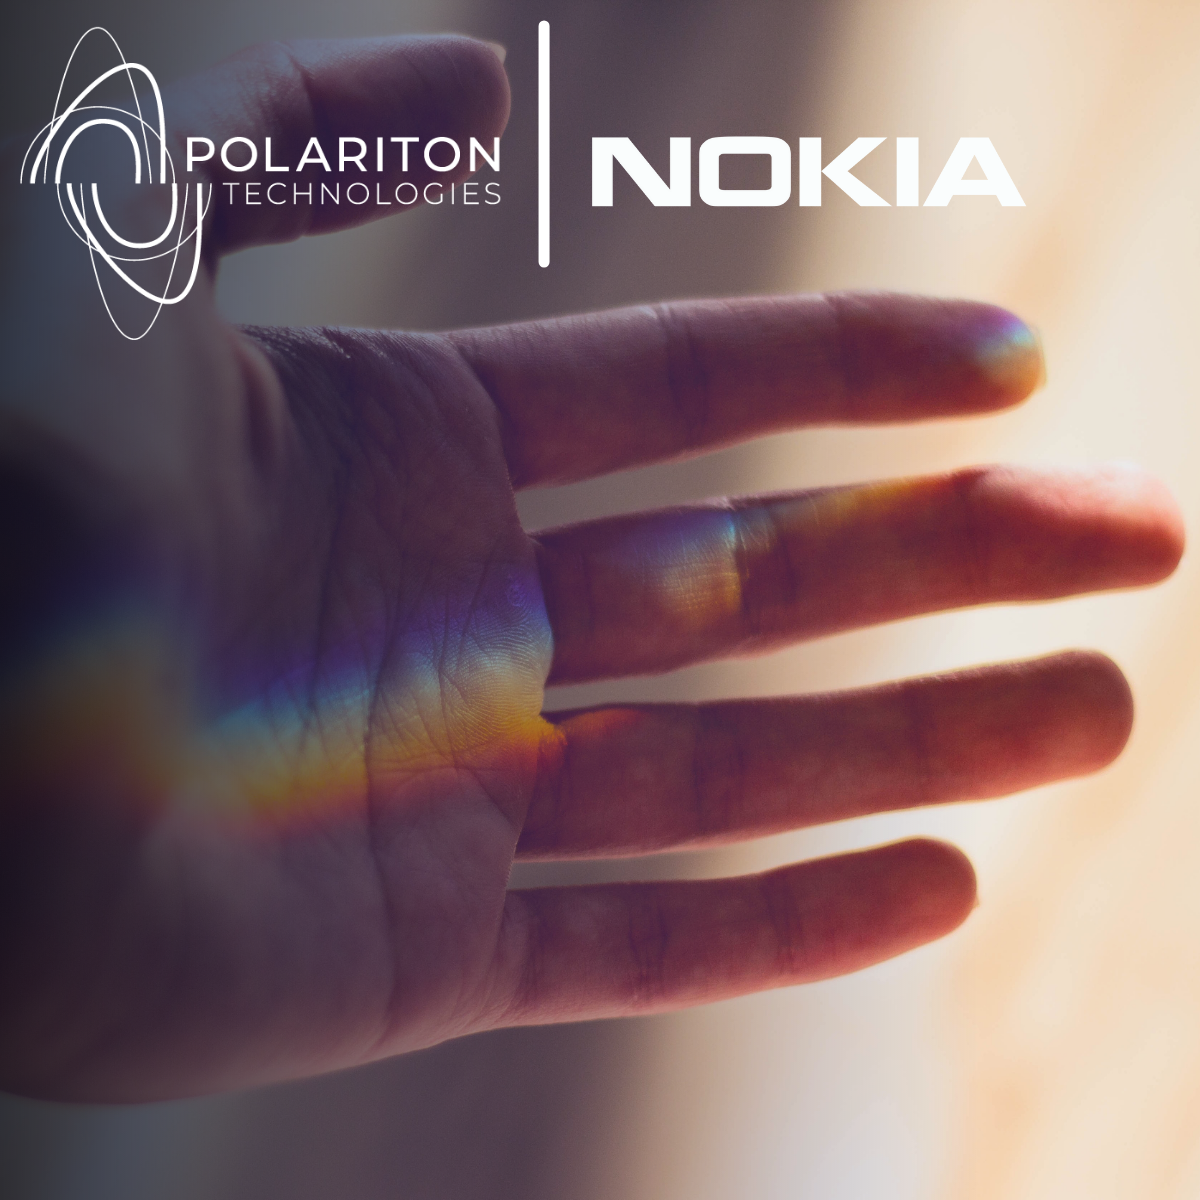 Polariton and Nokia Collaboration